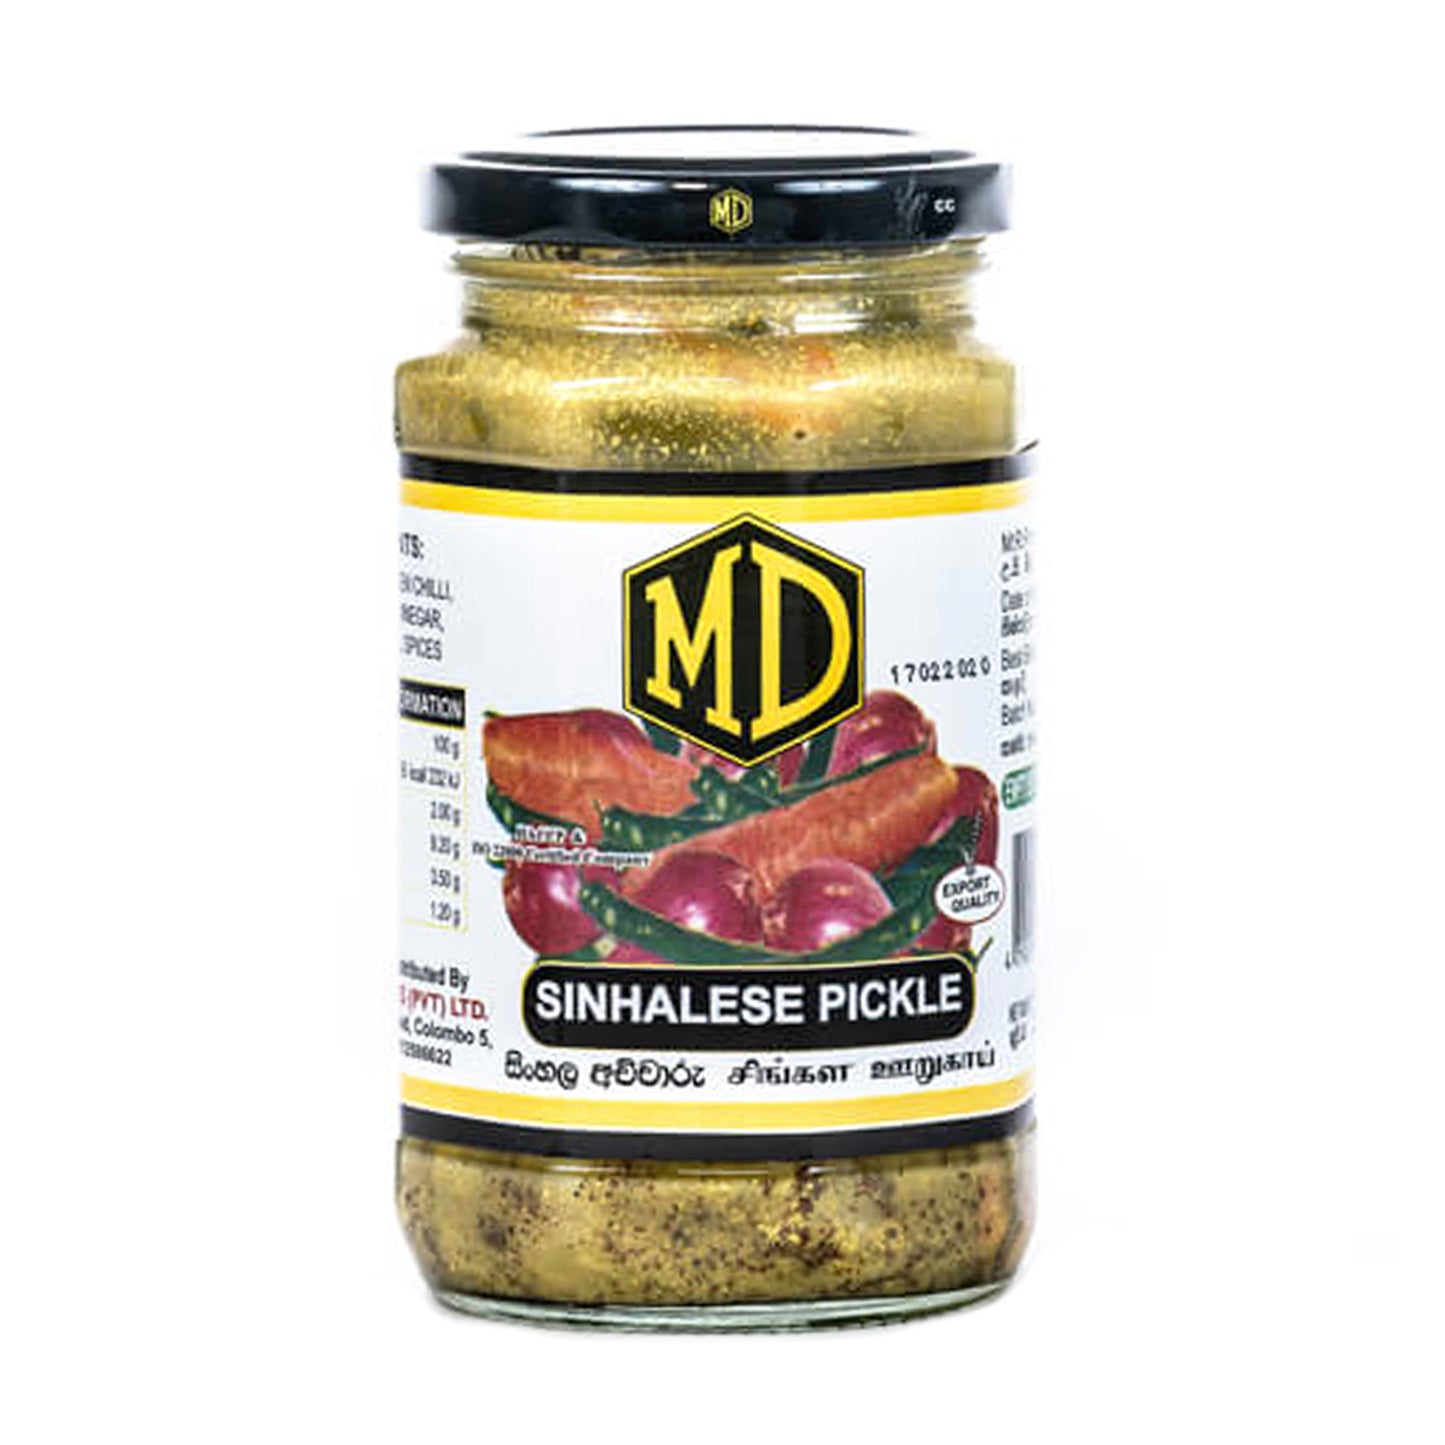 MD singalesiske Pickle (375g)